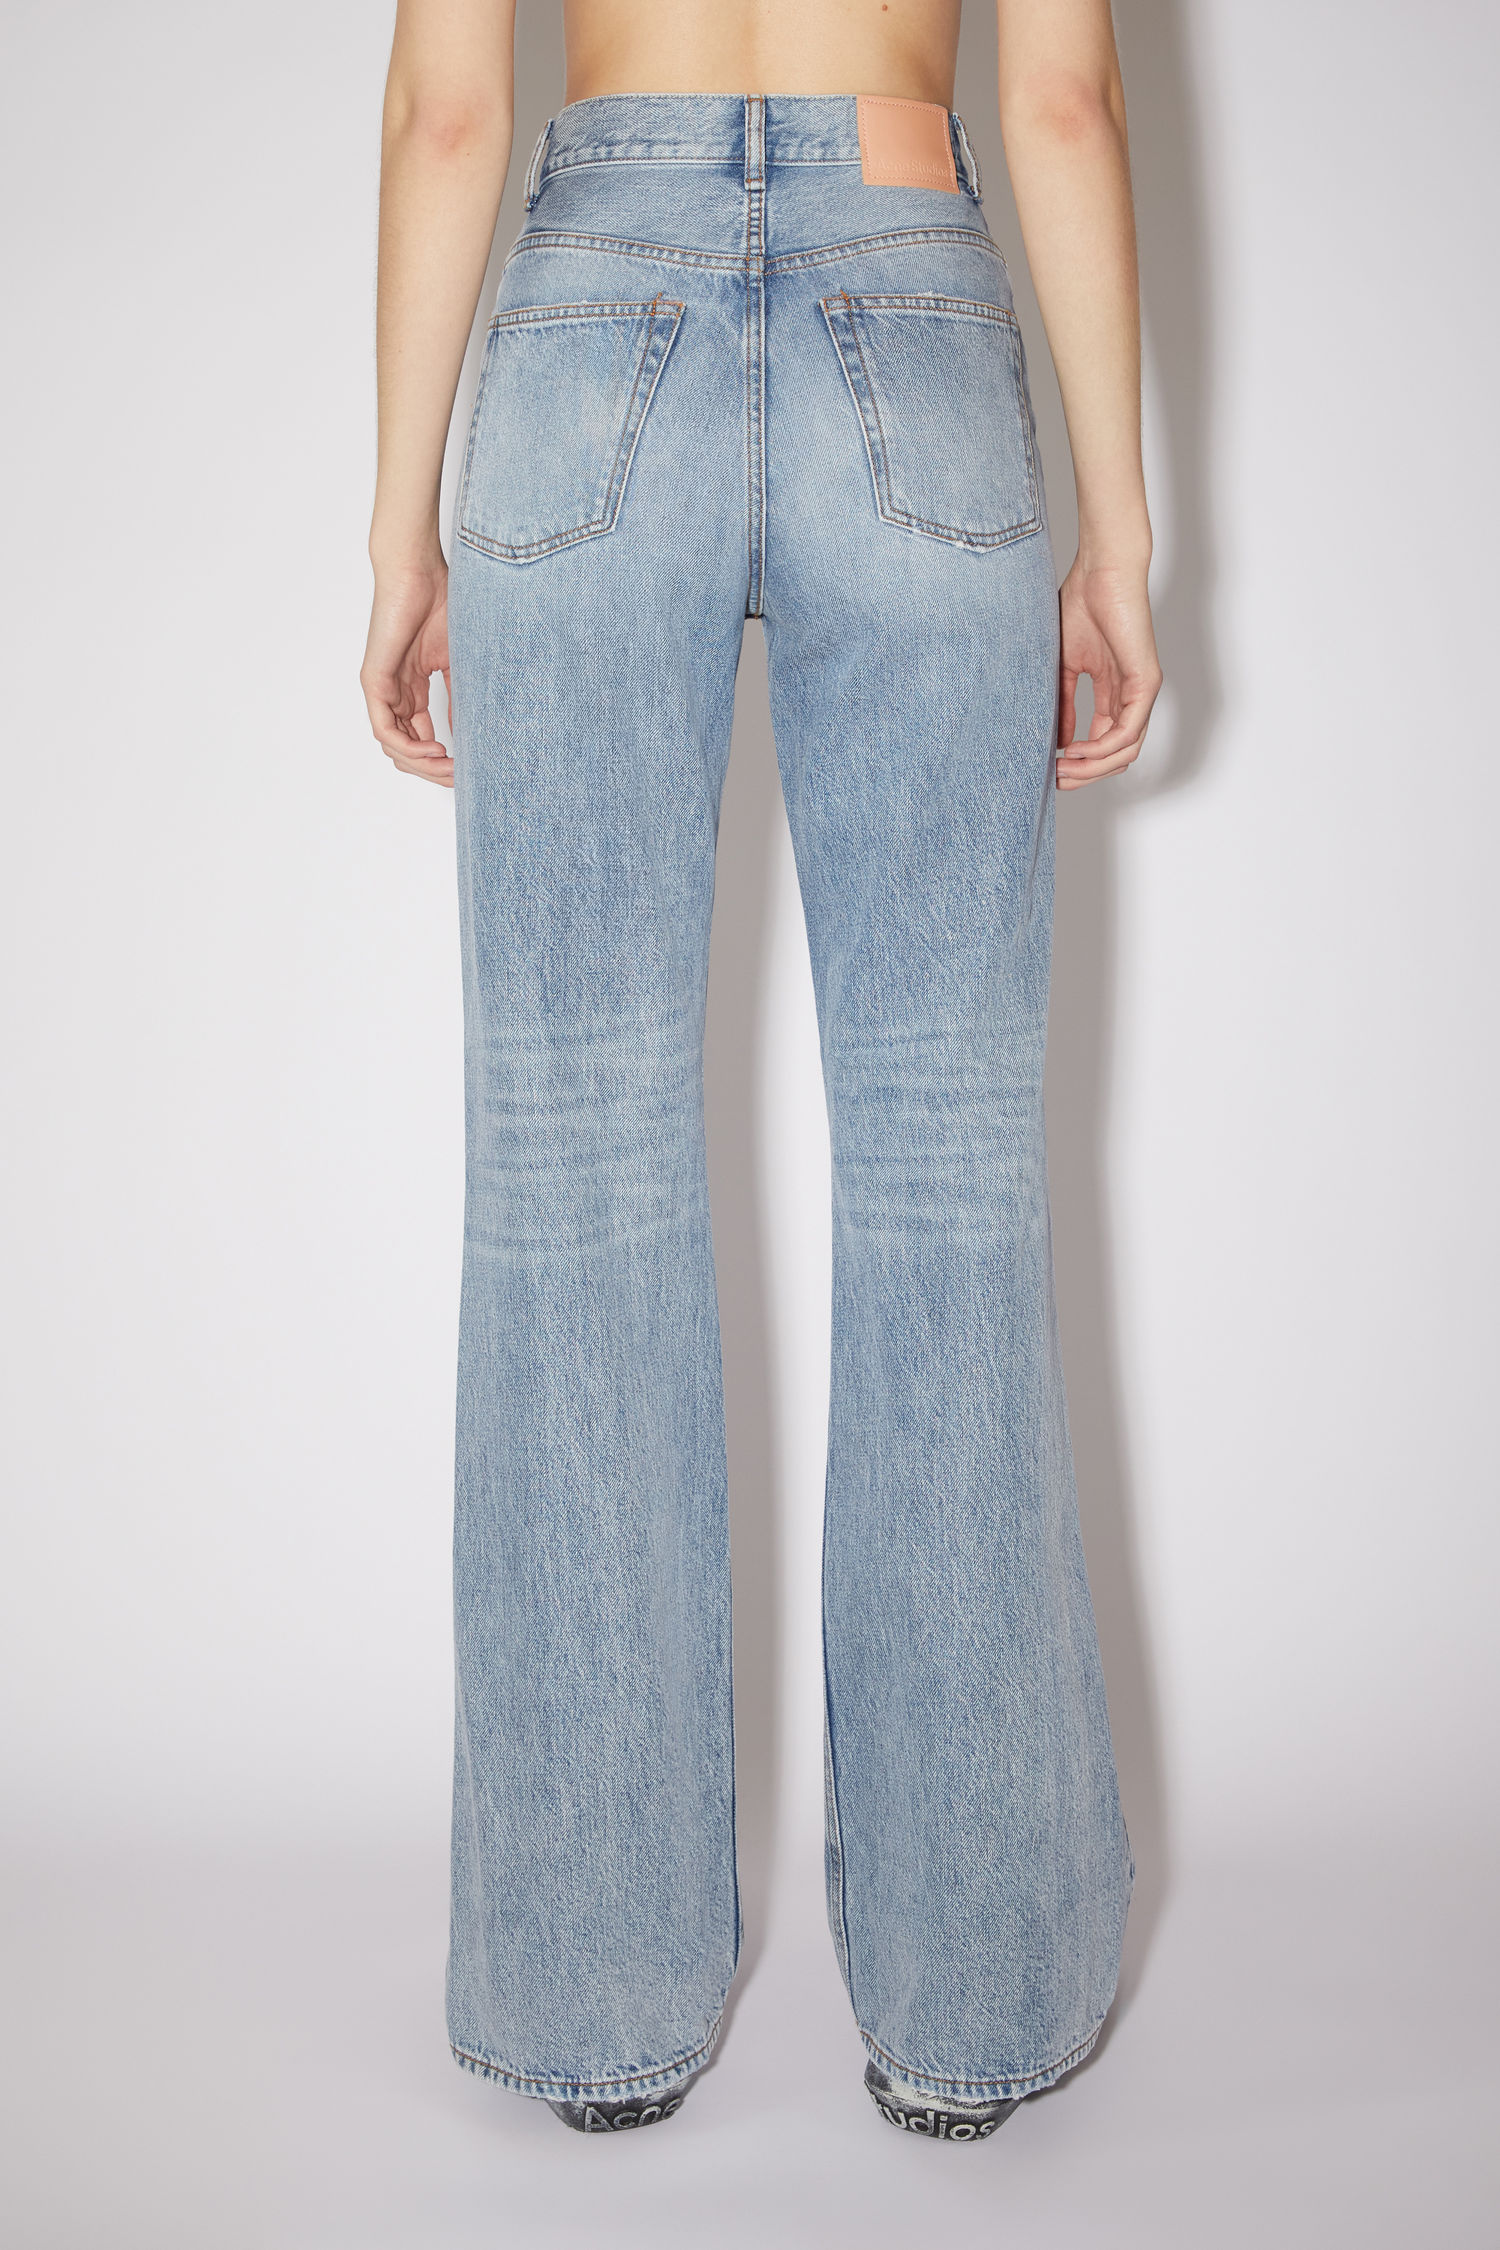 Acne Studios - Regular fit jeans - 1990 - Light blue